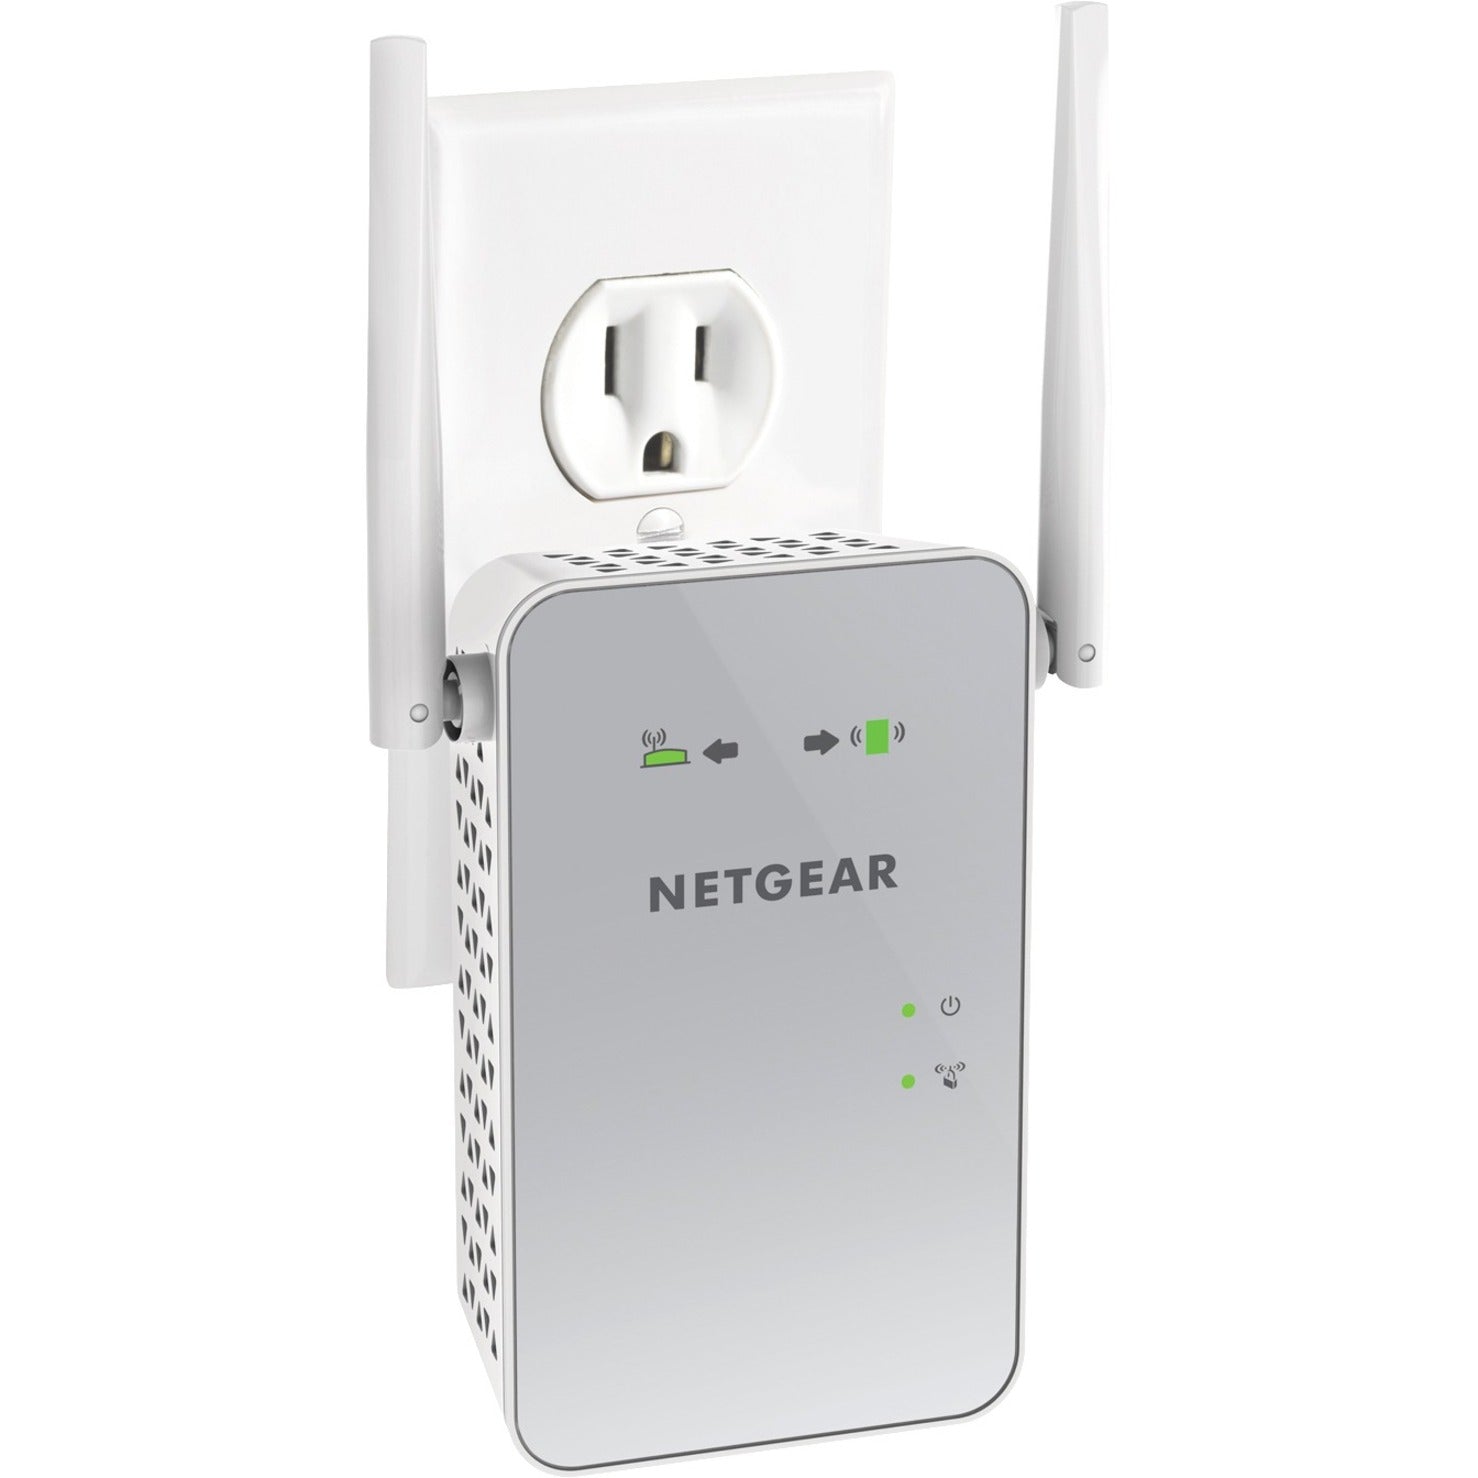 Netgear EX6150-100NAS AC1200 WiFi Range Extender, Dual Band Gigabit, 1.17 Gbit/s Wireless Transmission Speed